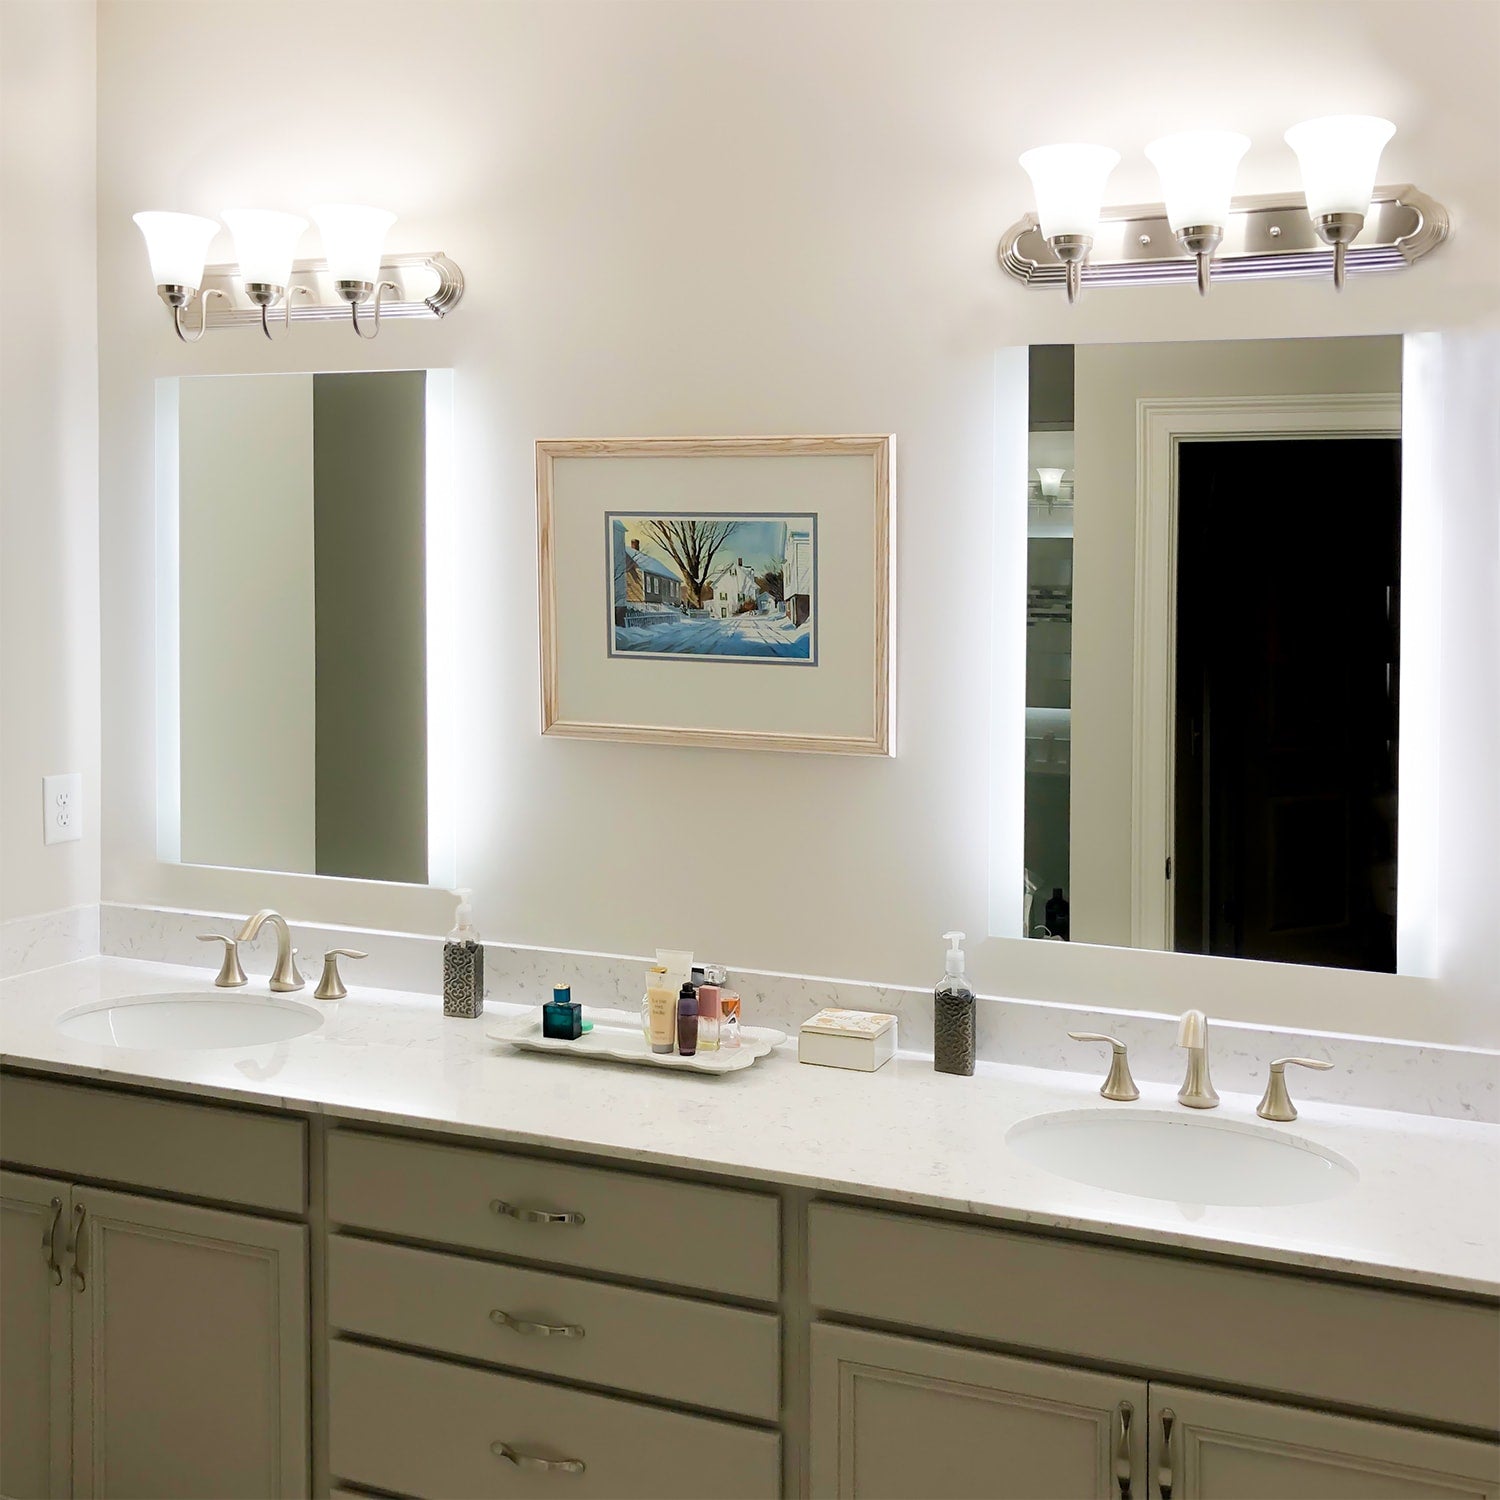 24 Inch Bathroom Mirror - How To Blog